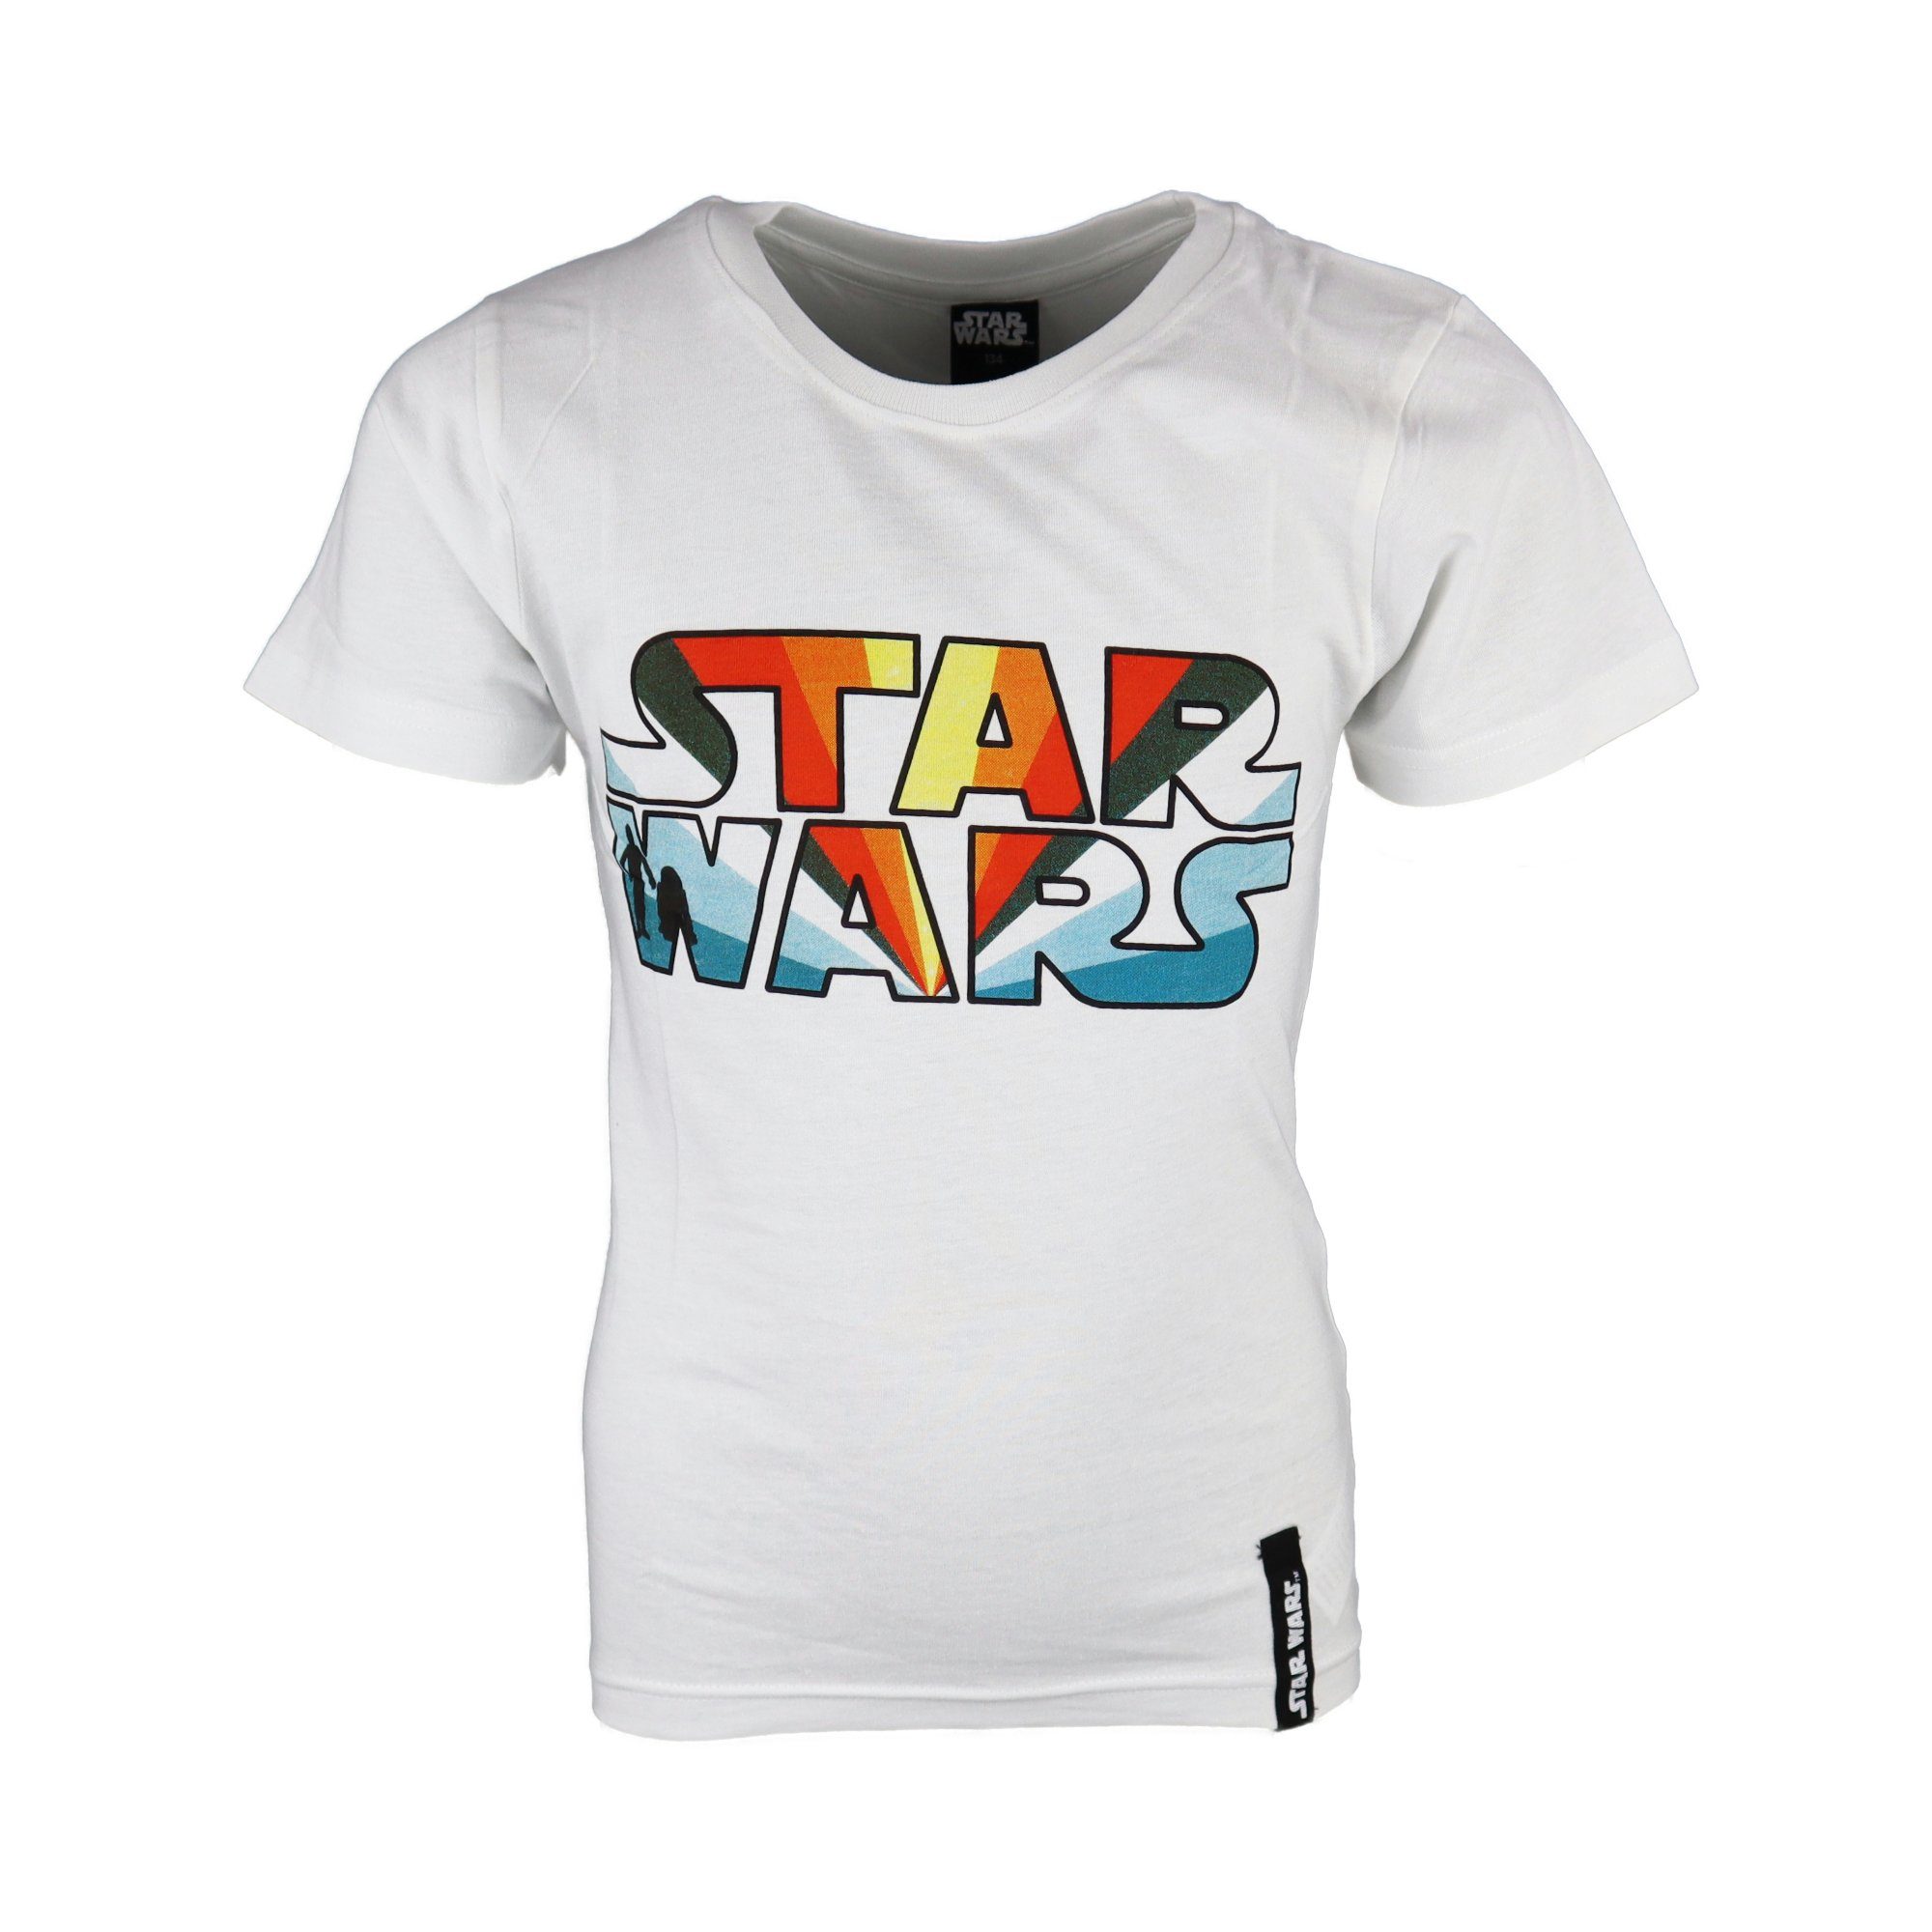 Disney Print-Shirt Star Wars Jugend Jungen T-Shirt Gr. 134 bis 164, 100% Baumwolle Weiß